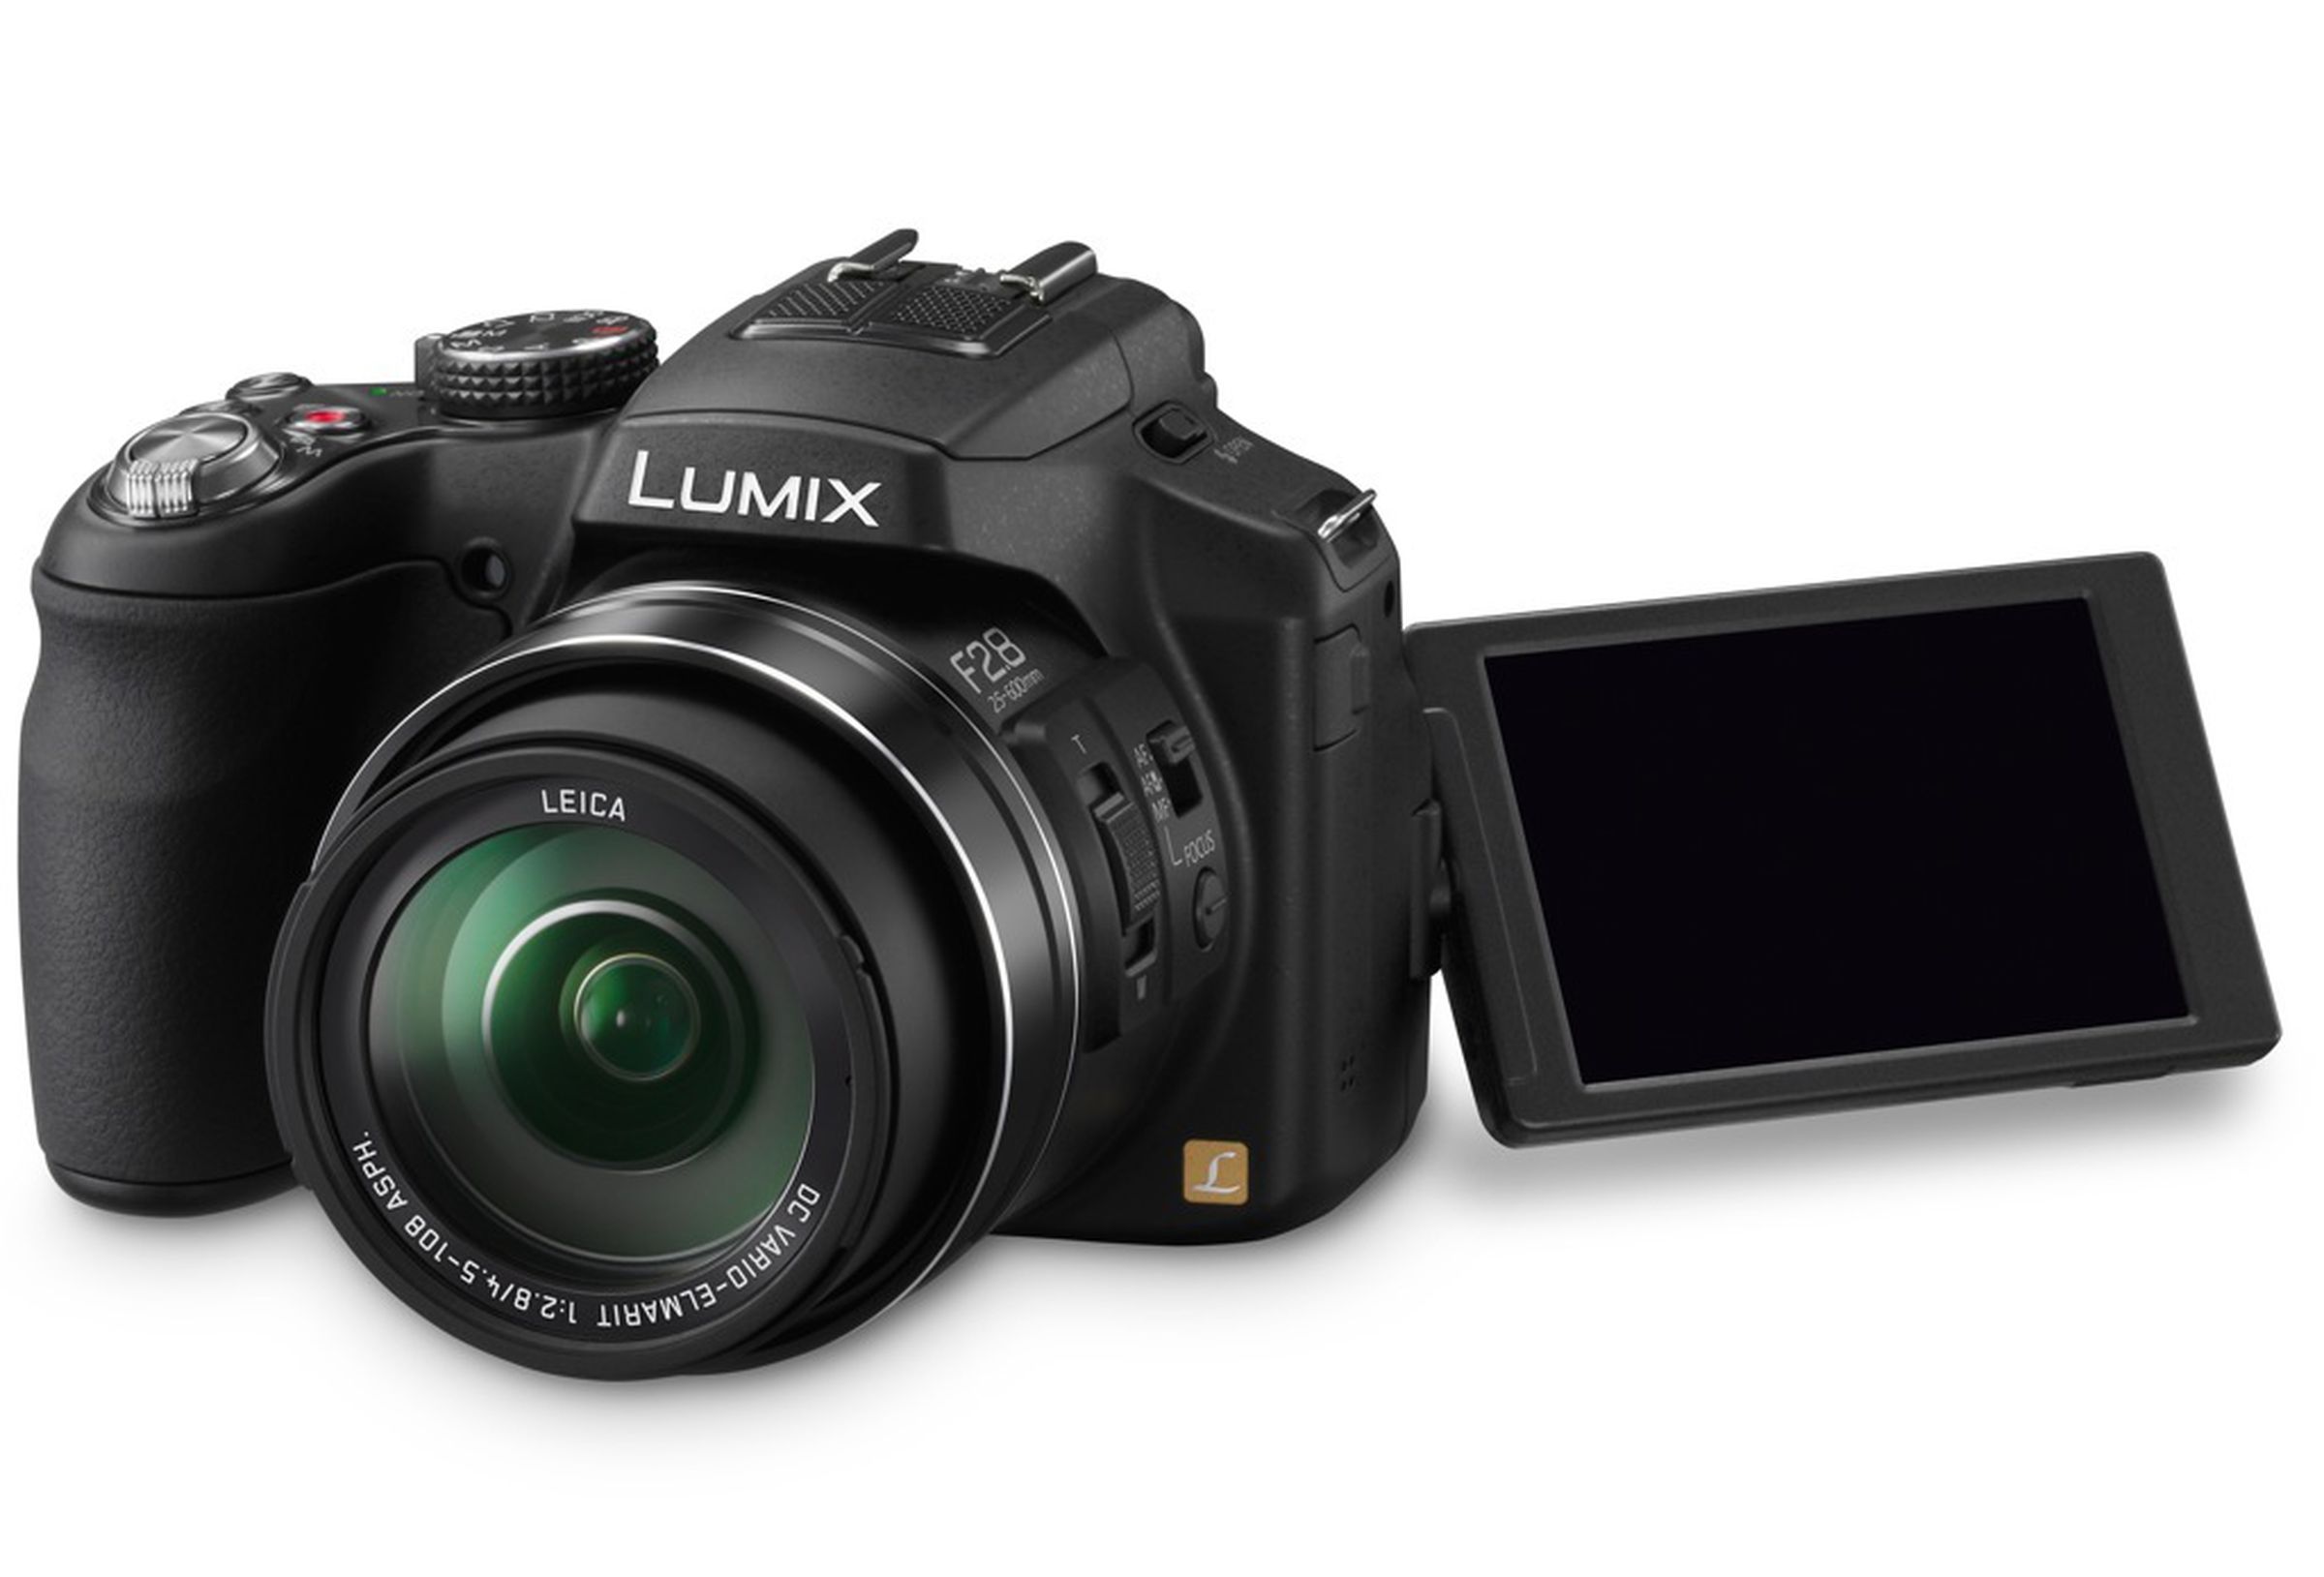 Panasonic Lumix refresh pictures